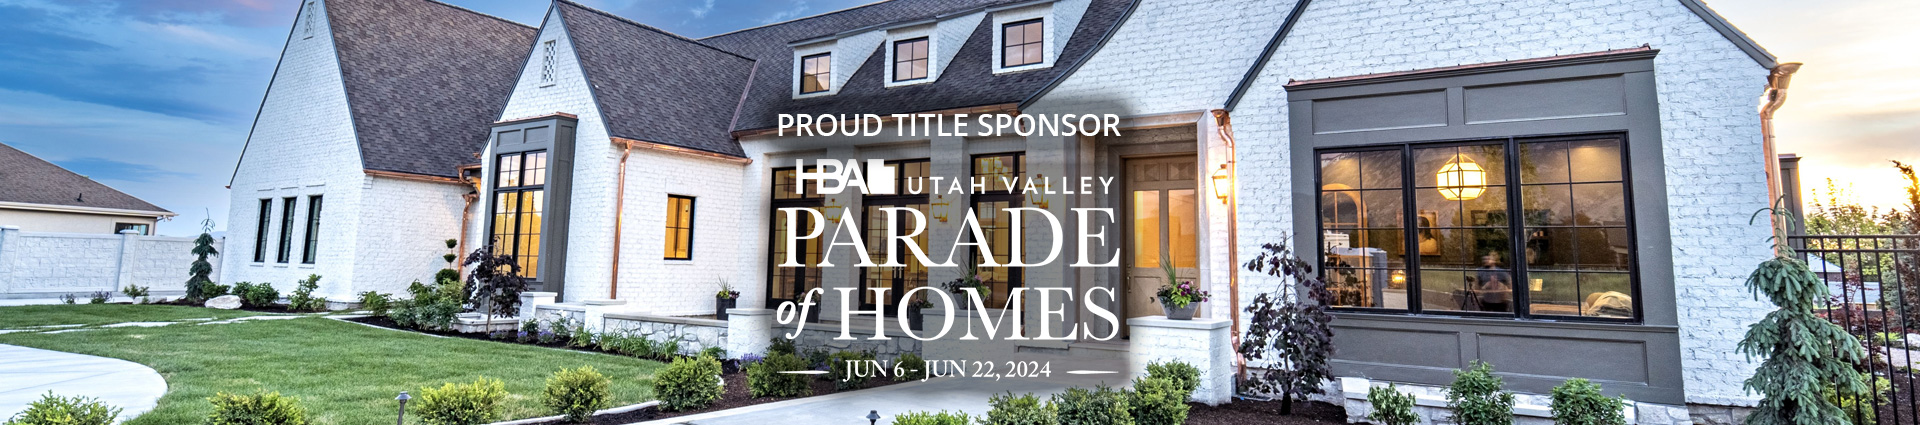 Utah Valley Parade of Homes 2024 - Title Sponsor